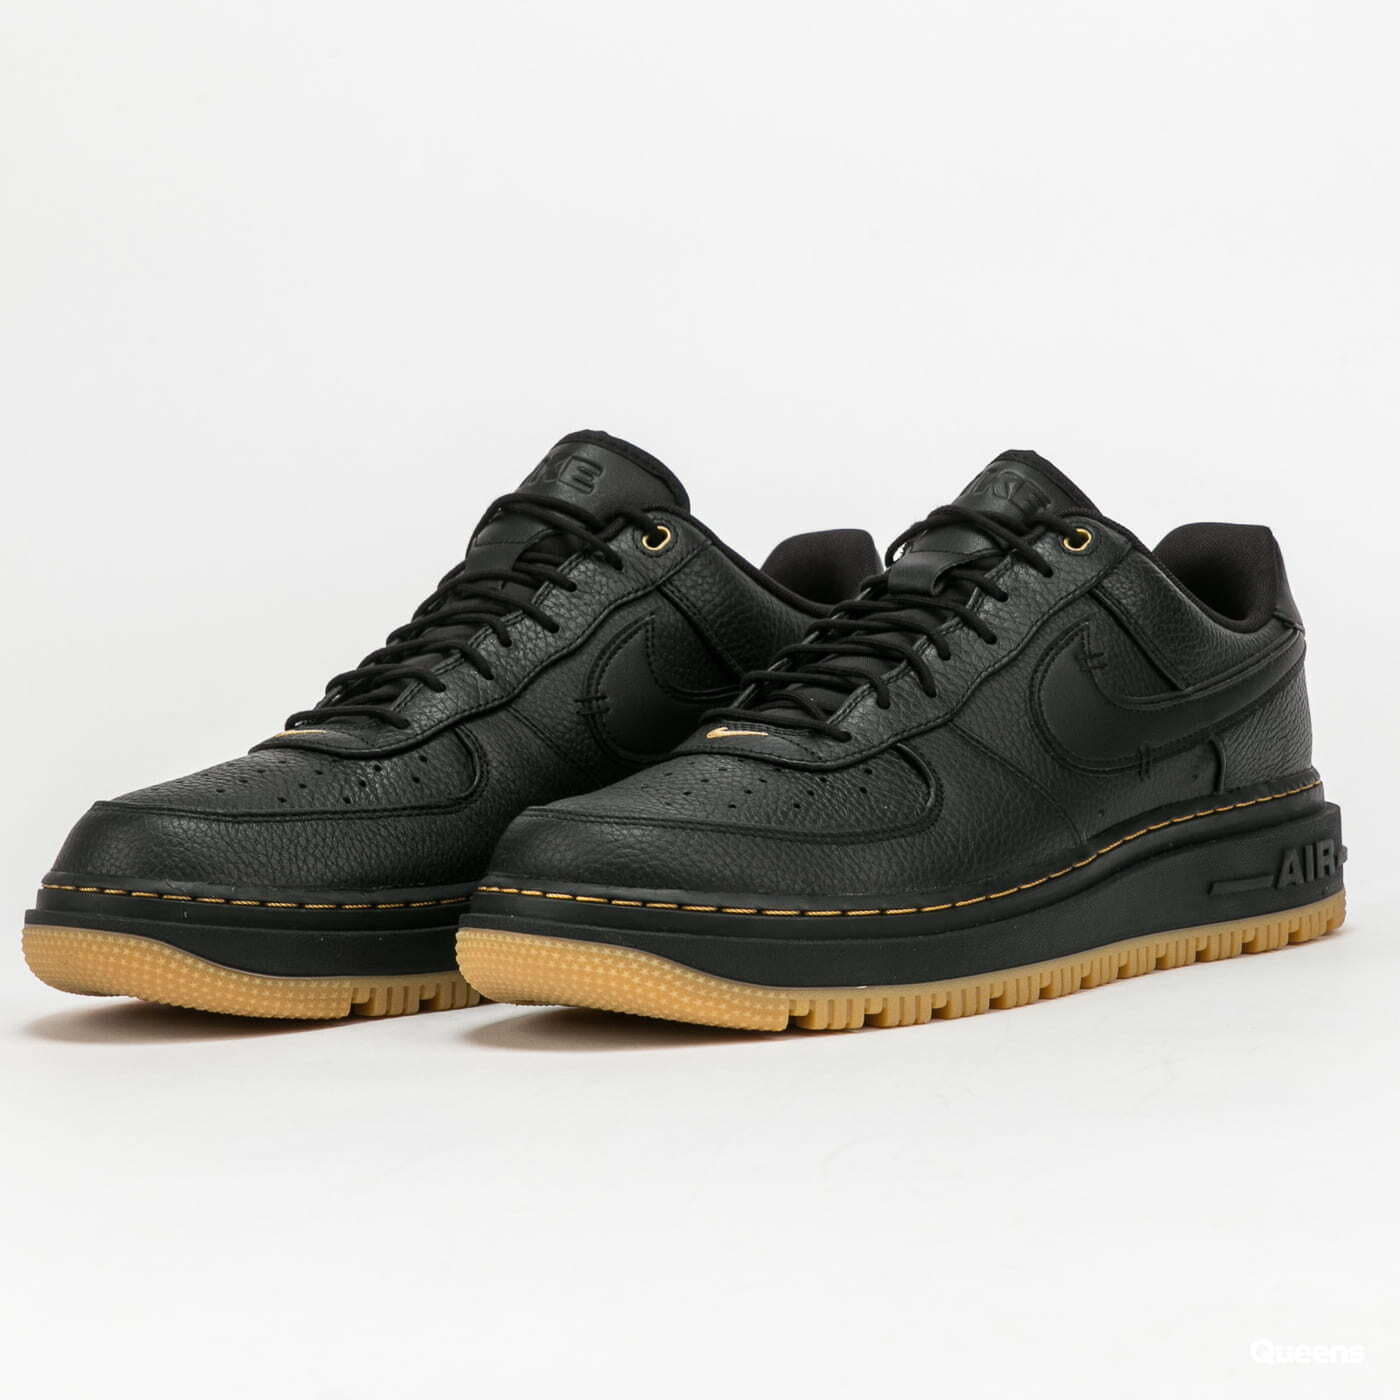 Herren Sneaker und Schuhe Nike Air Force 1 Luxe Black/ Black-Bucktan-Gum Yellow